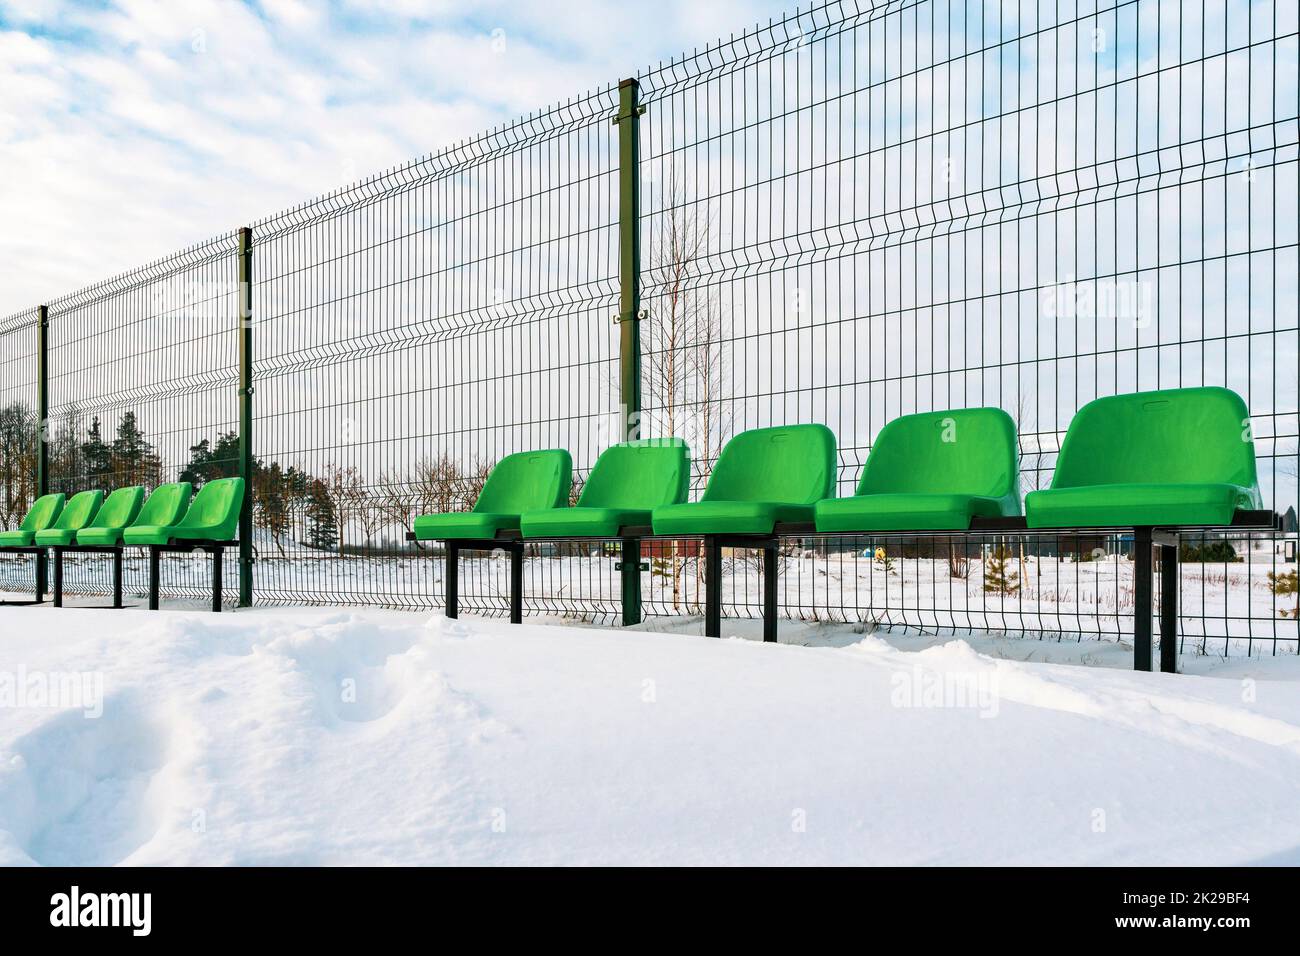 Die Reihe grüner Plastiksitze im Sportstadion Stockfoto